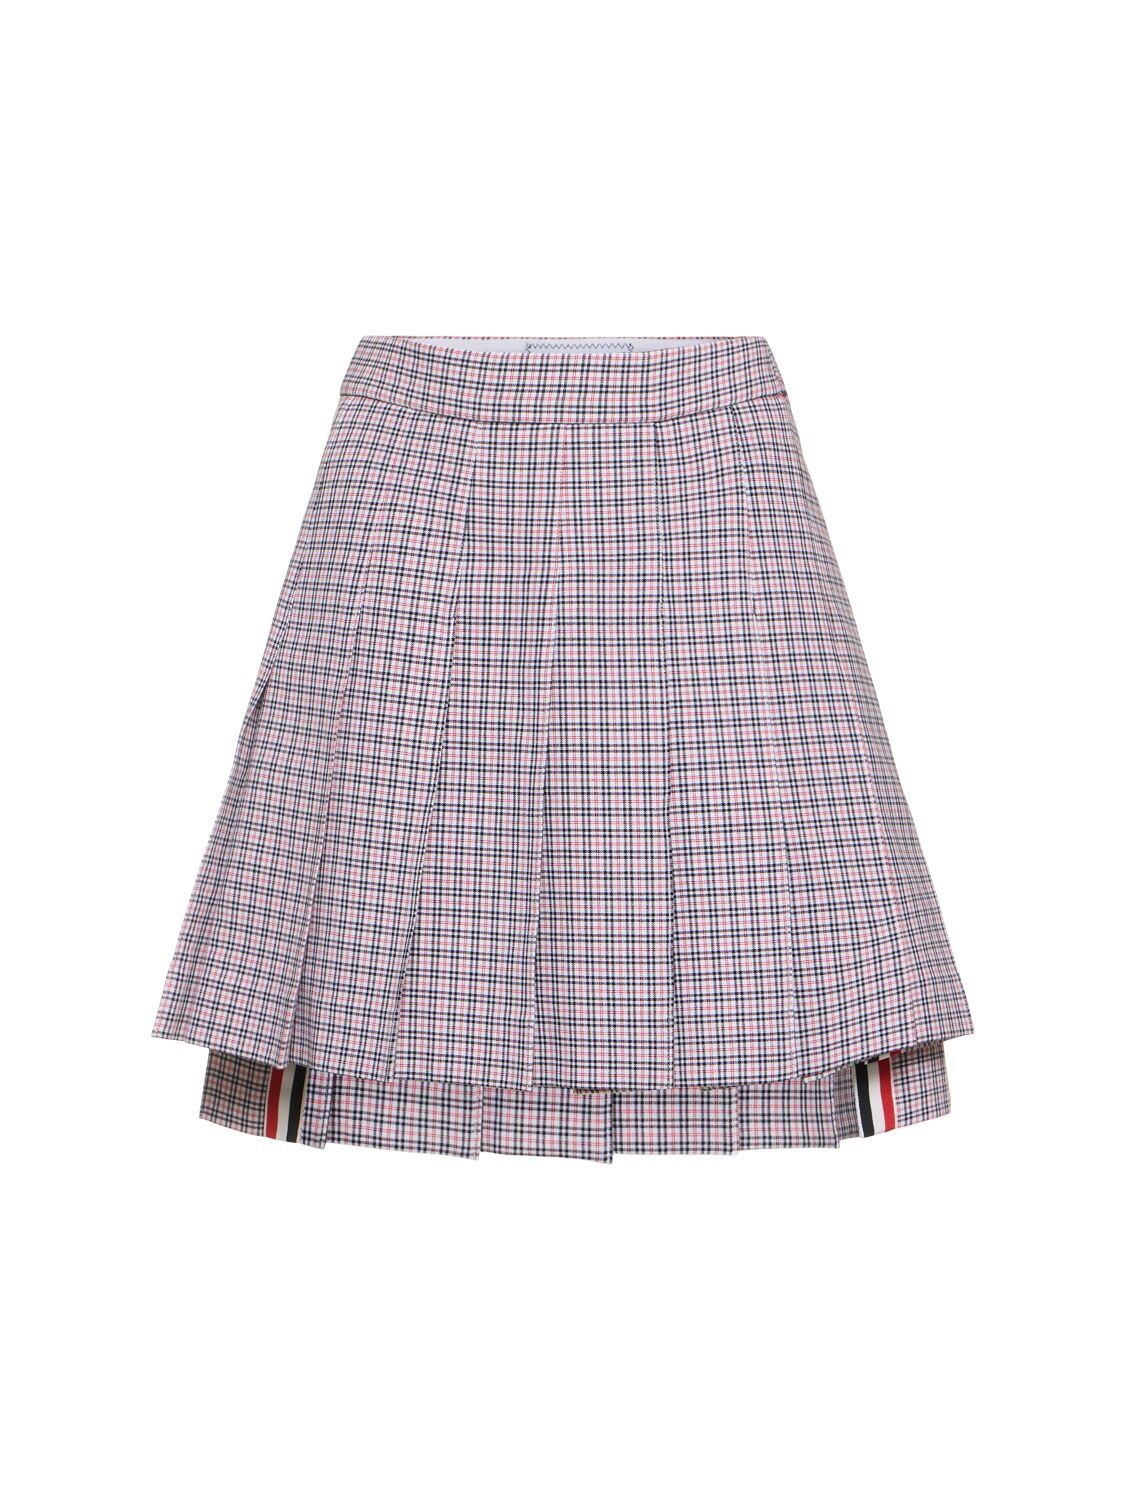 Image of Check Printed Crepe Pleated Mini Skirt